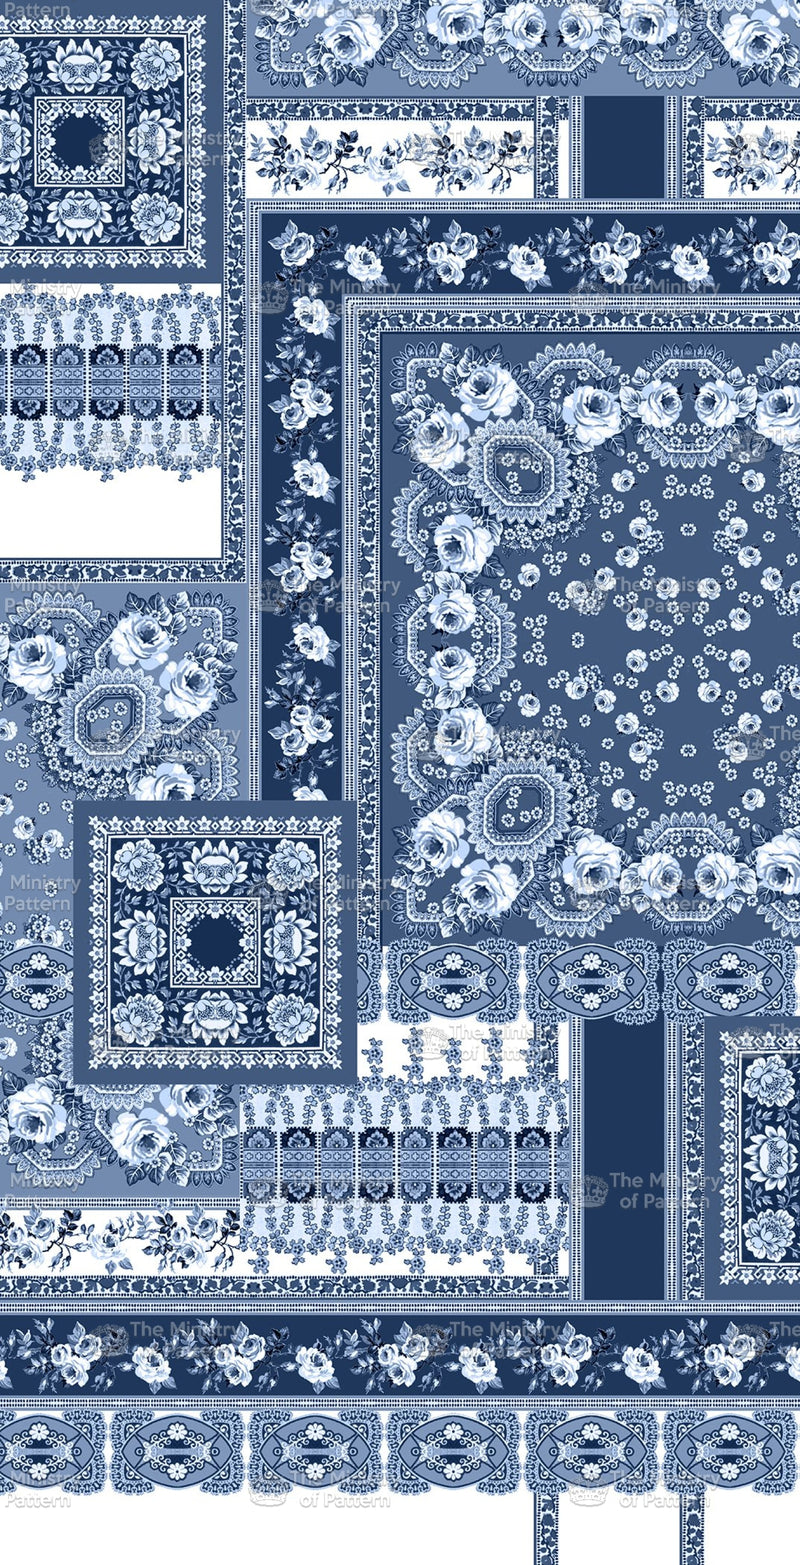 Decorative Scarf Print - The Ministry Of Pattern - Patternsforlicensing-textilestudio-printdesignstudio-trendinspiration-digitalprintdesign-exclusivepattern-printtrends-patternoftheweek